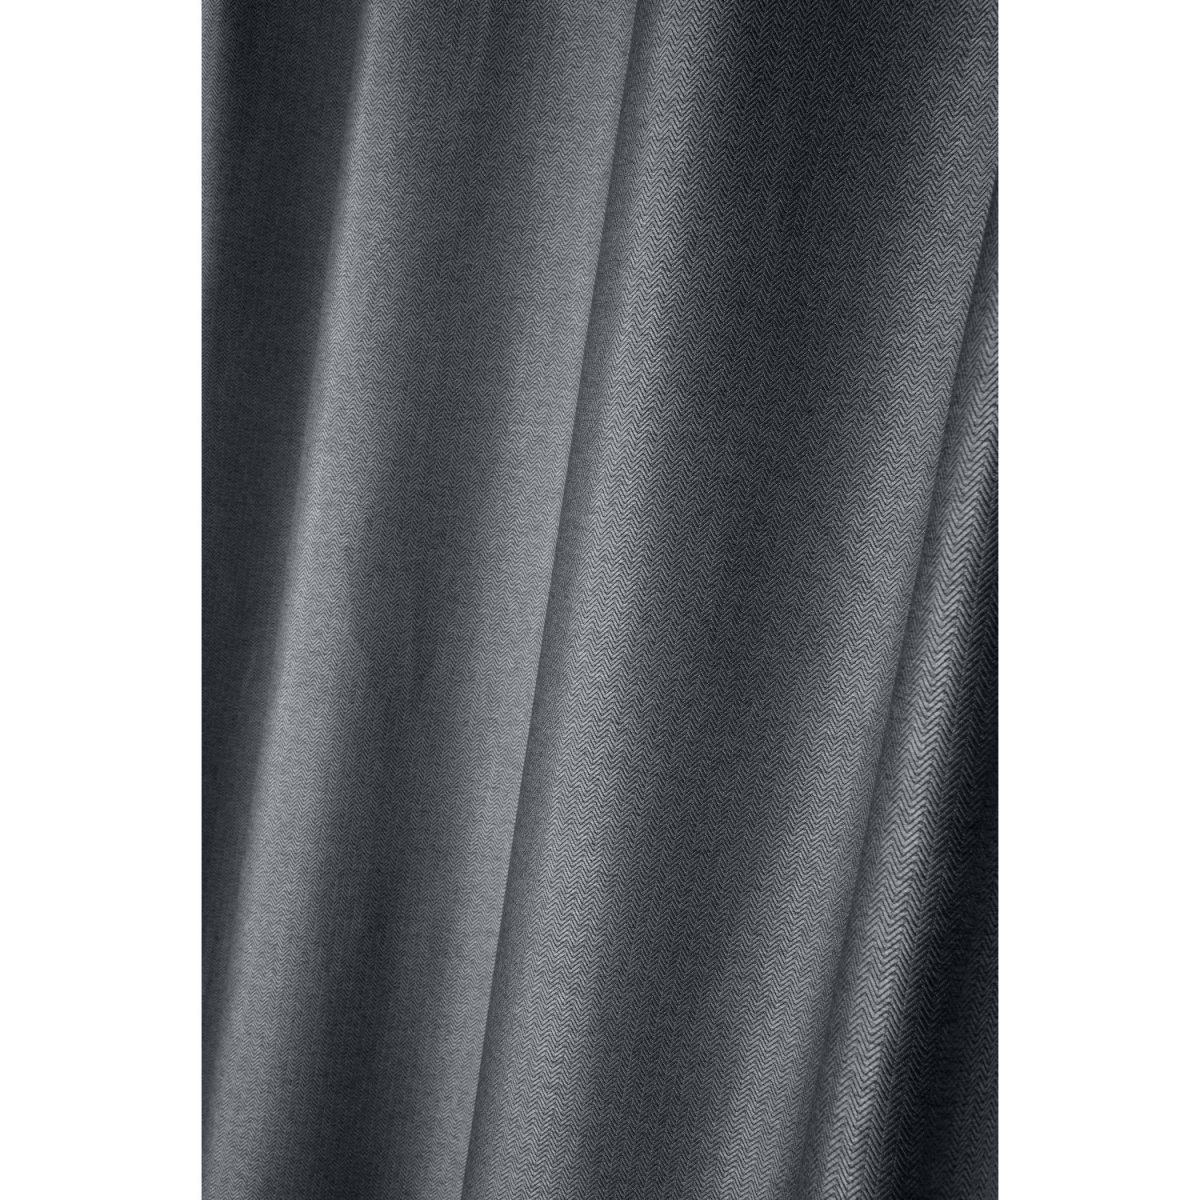 draperie gri antracit texturata blackout Edimbourg Antracite